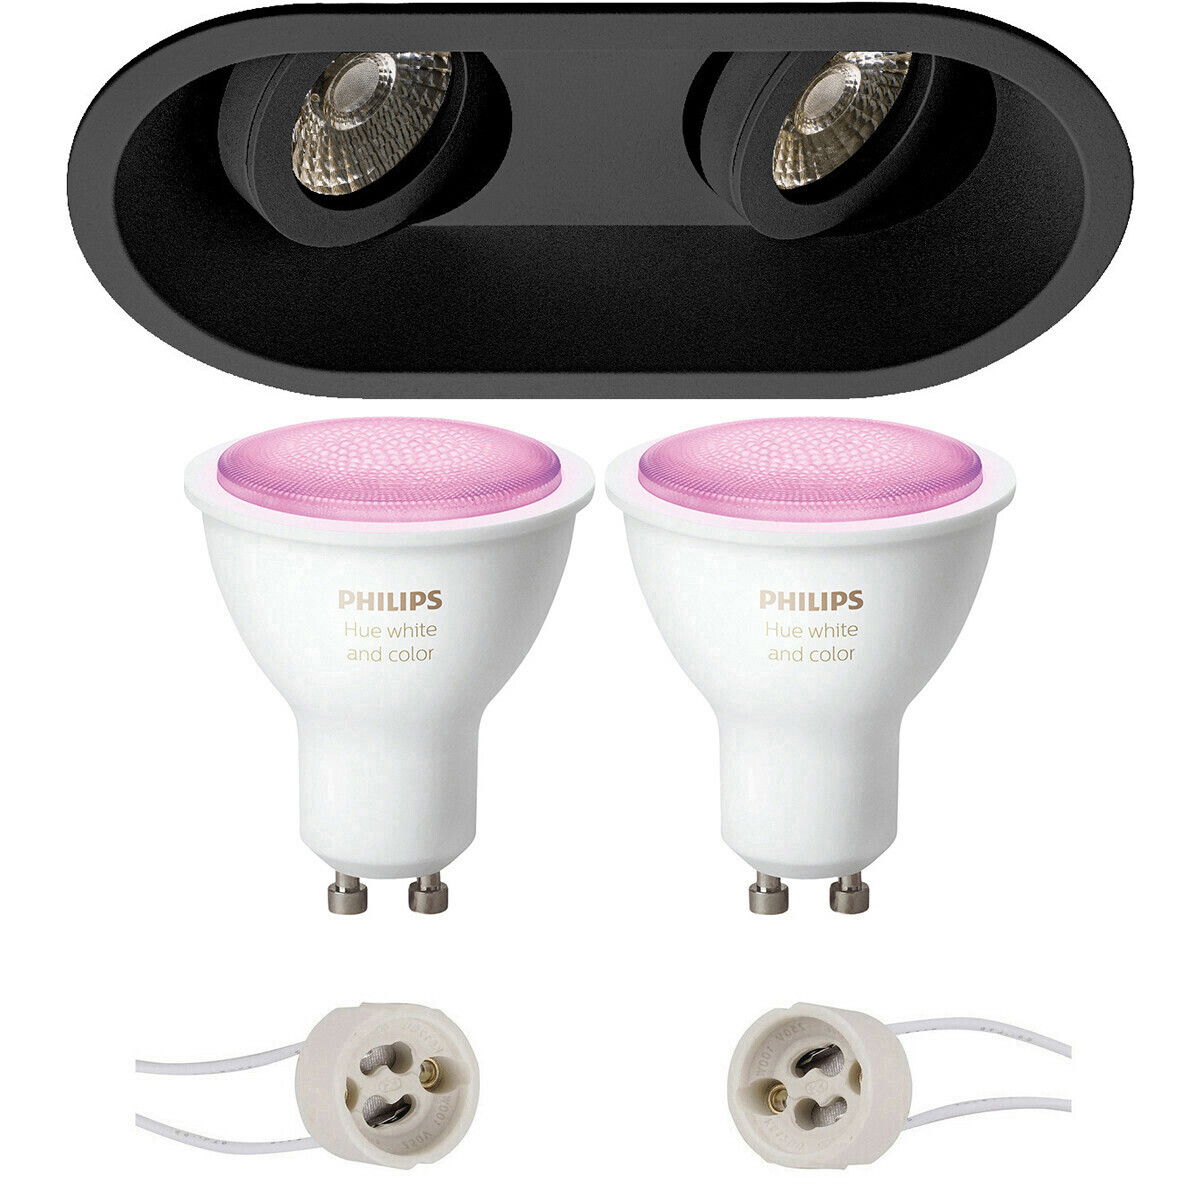 BES LED Pragmi Zano Pro - Inbouw Ovaal Dubbel - Mat Zwart - Kantelbaar - 185x93mm - Philips Hue - LED Spot Set GU10 - White and Color Ambiance - Bluetooth